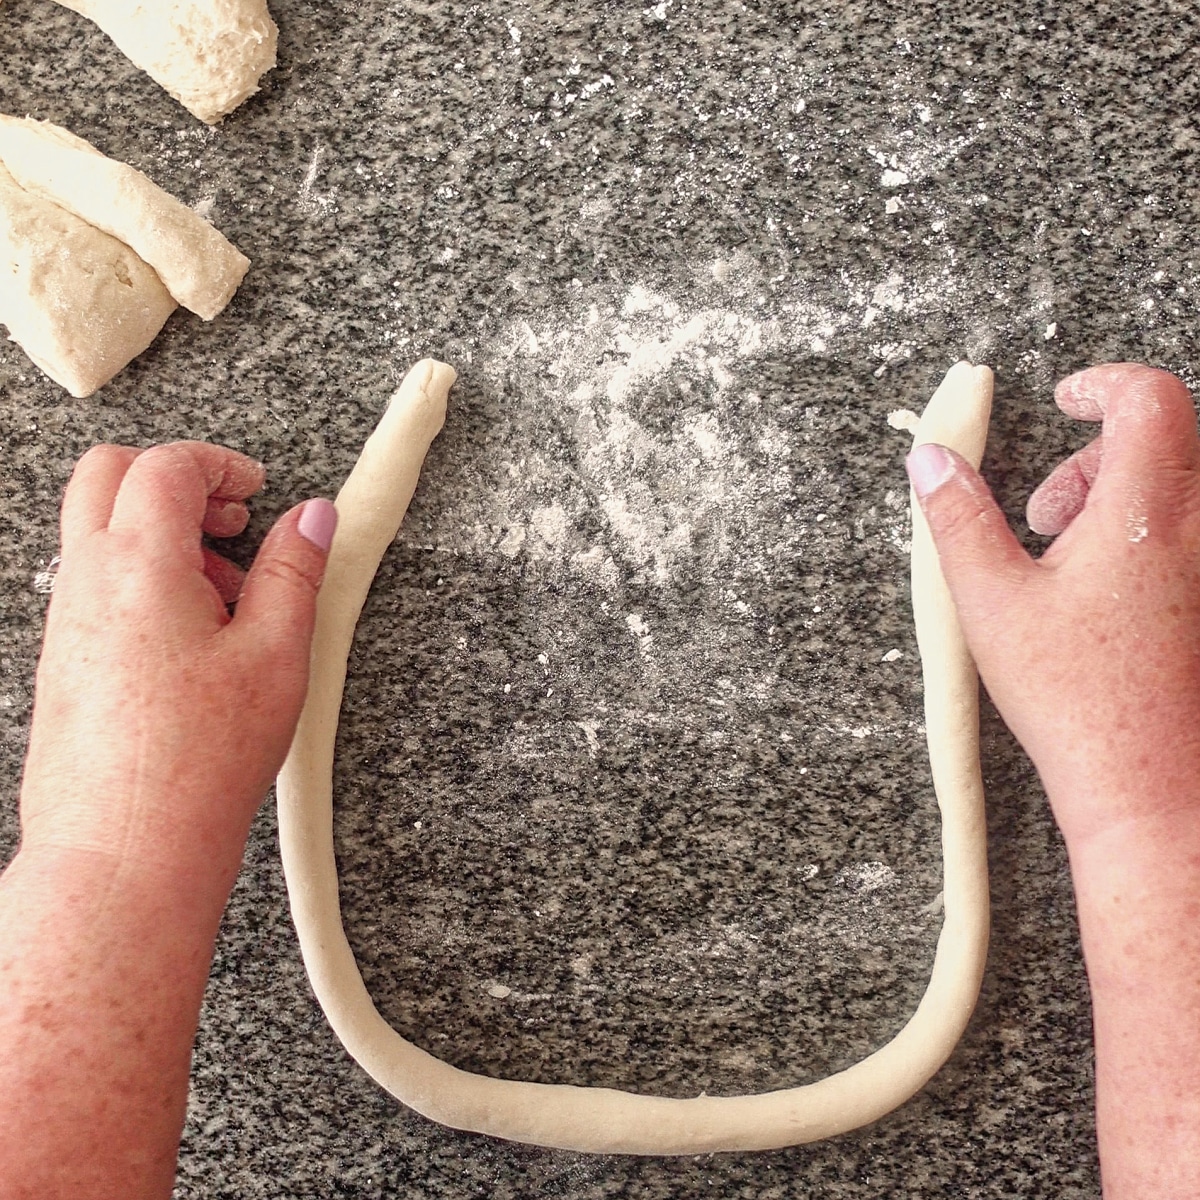 making a U shape with pretzel dough.